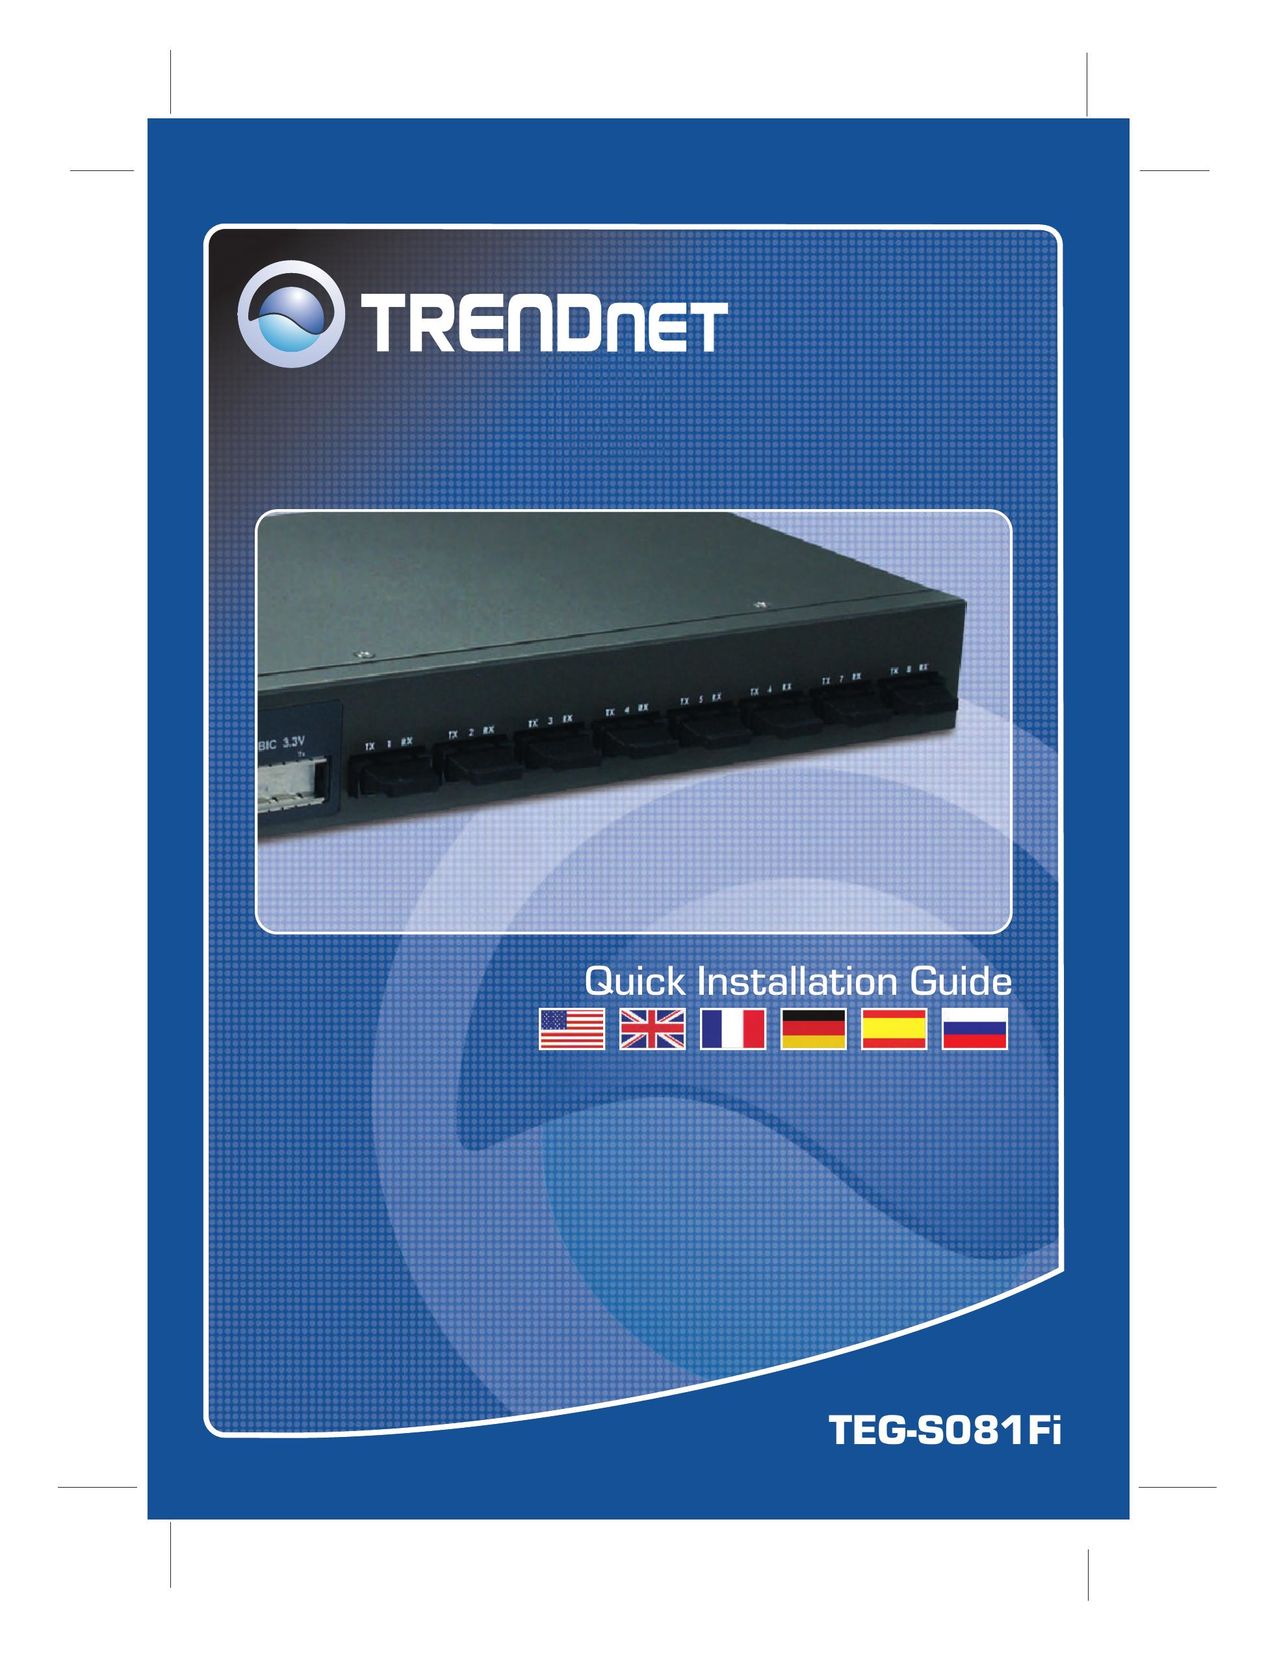 TRENDnet TEG-S081FI Switch User Manual